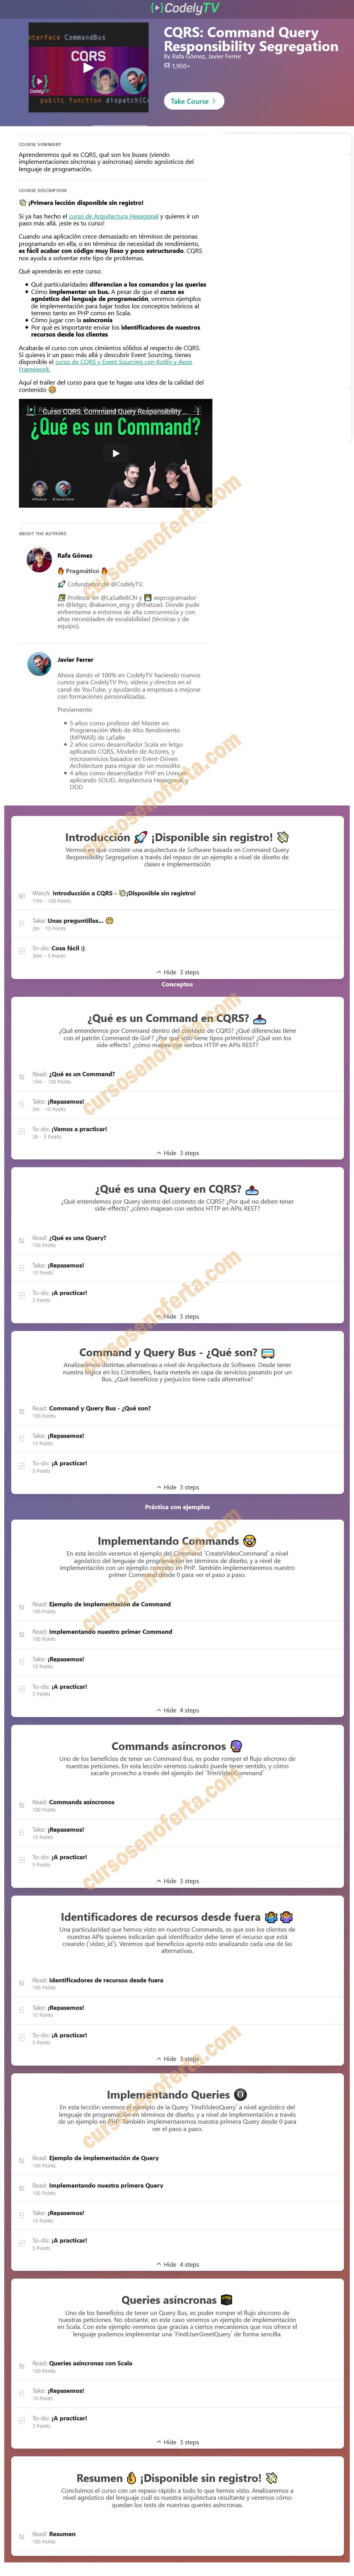 CQRS - Command Query Responsibility Segregation